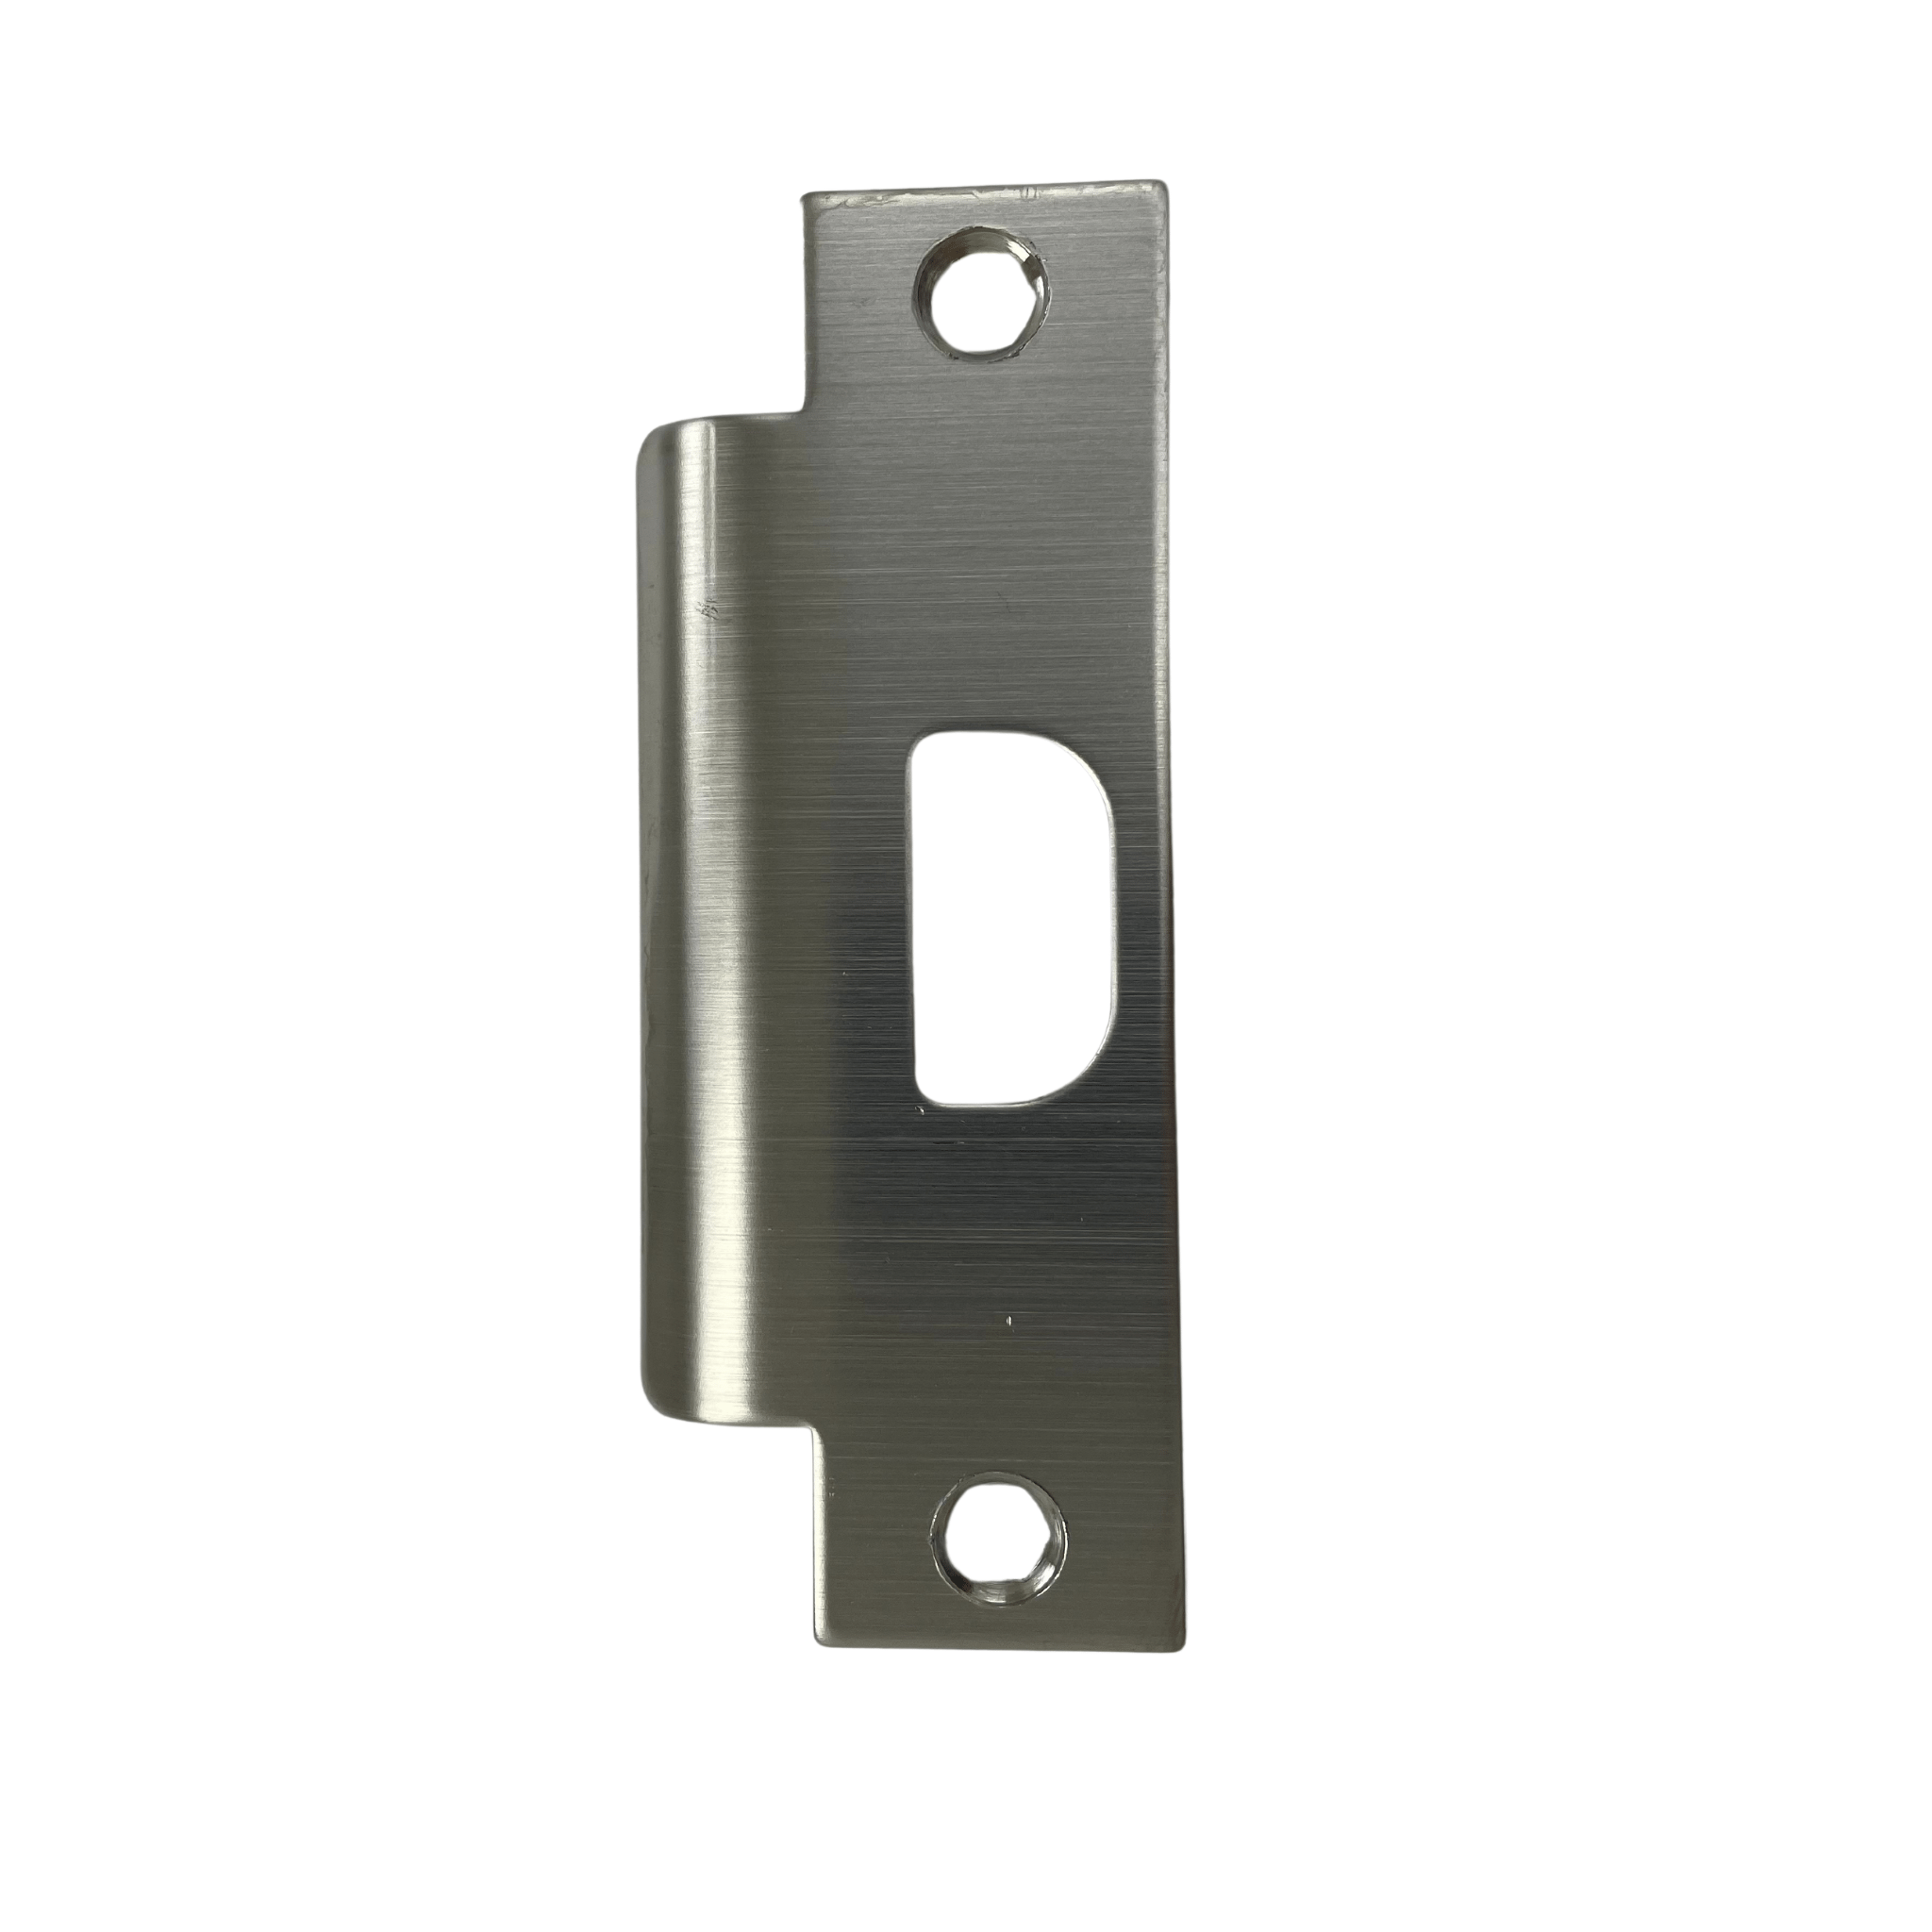 ASA Srike Plate - ANSI 4-7/8” x 1-1/4” Stainless Steel